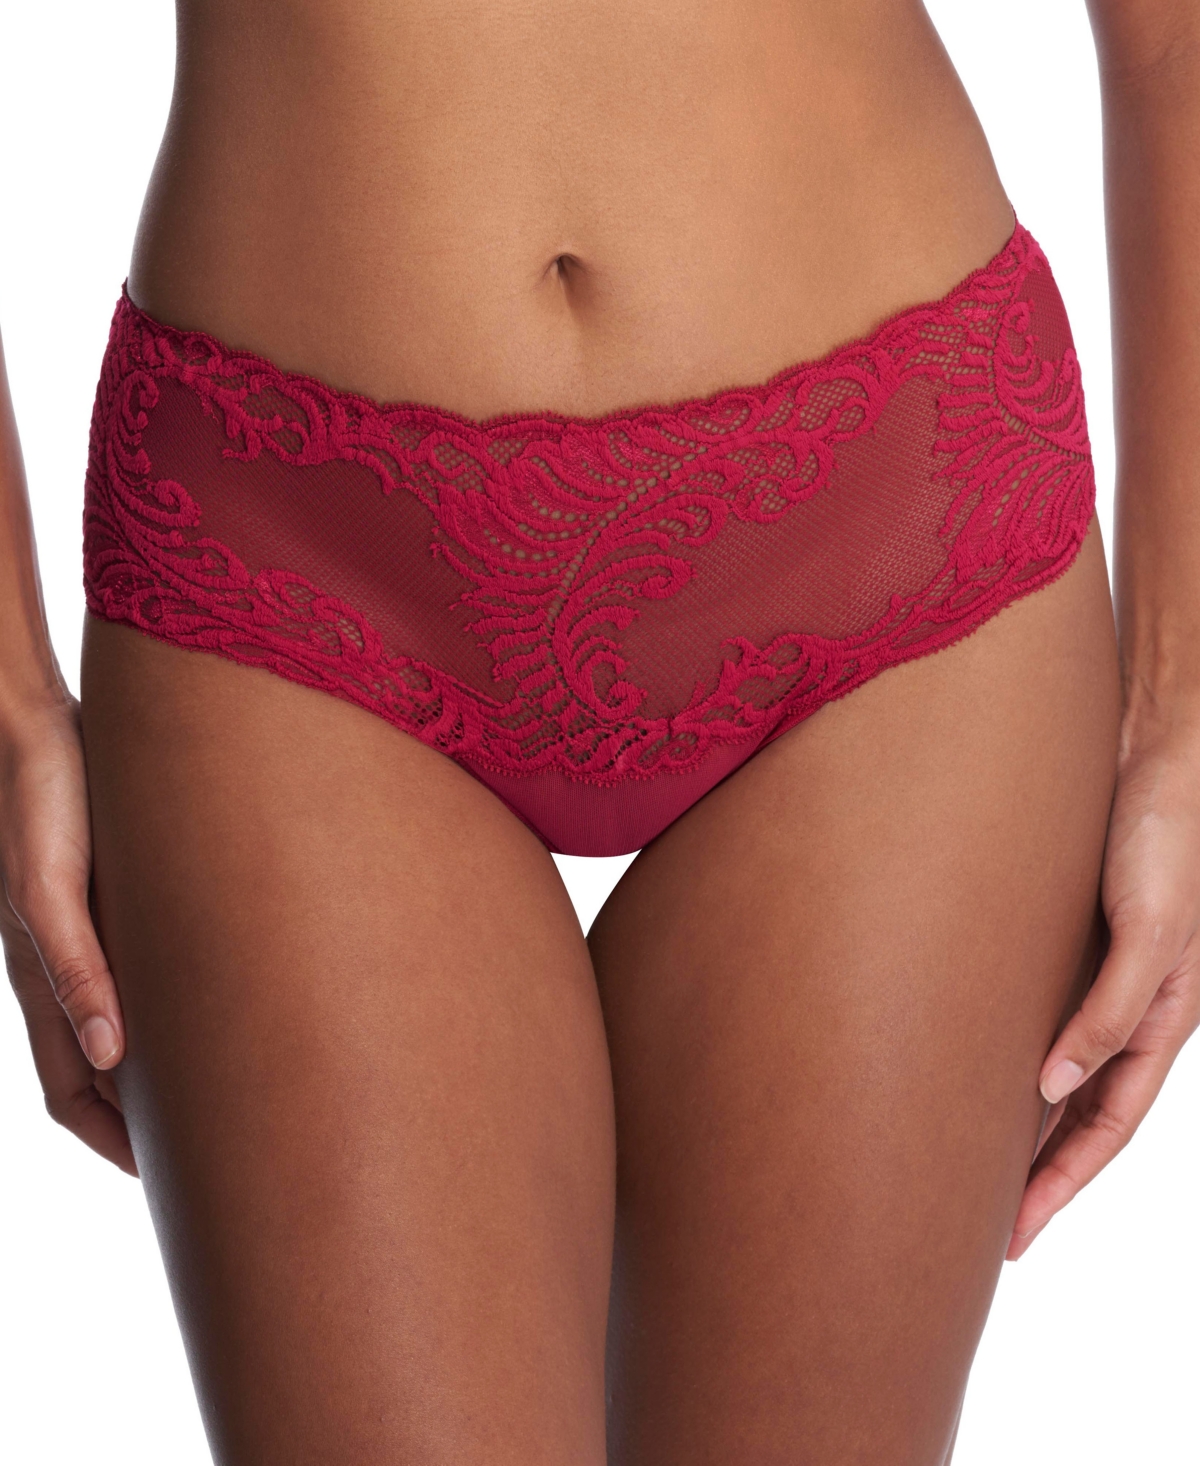 Women's Feathers Lace Brief Underwear 756023 - Pomegranate